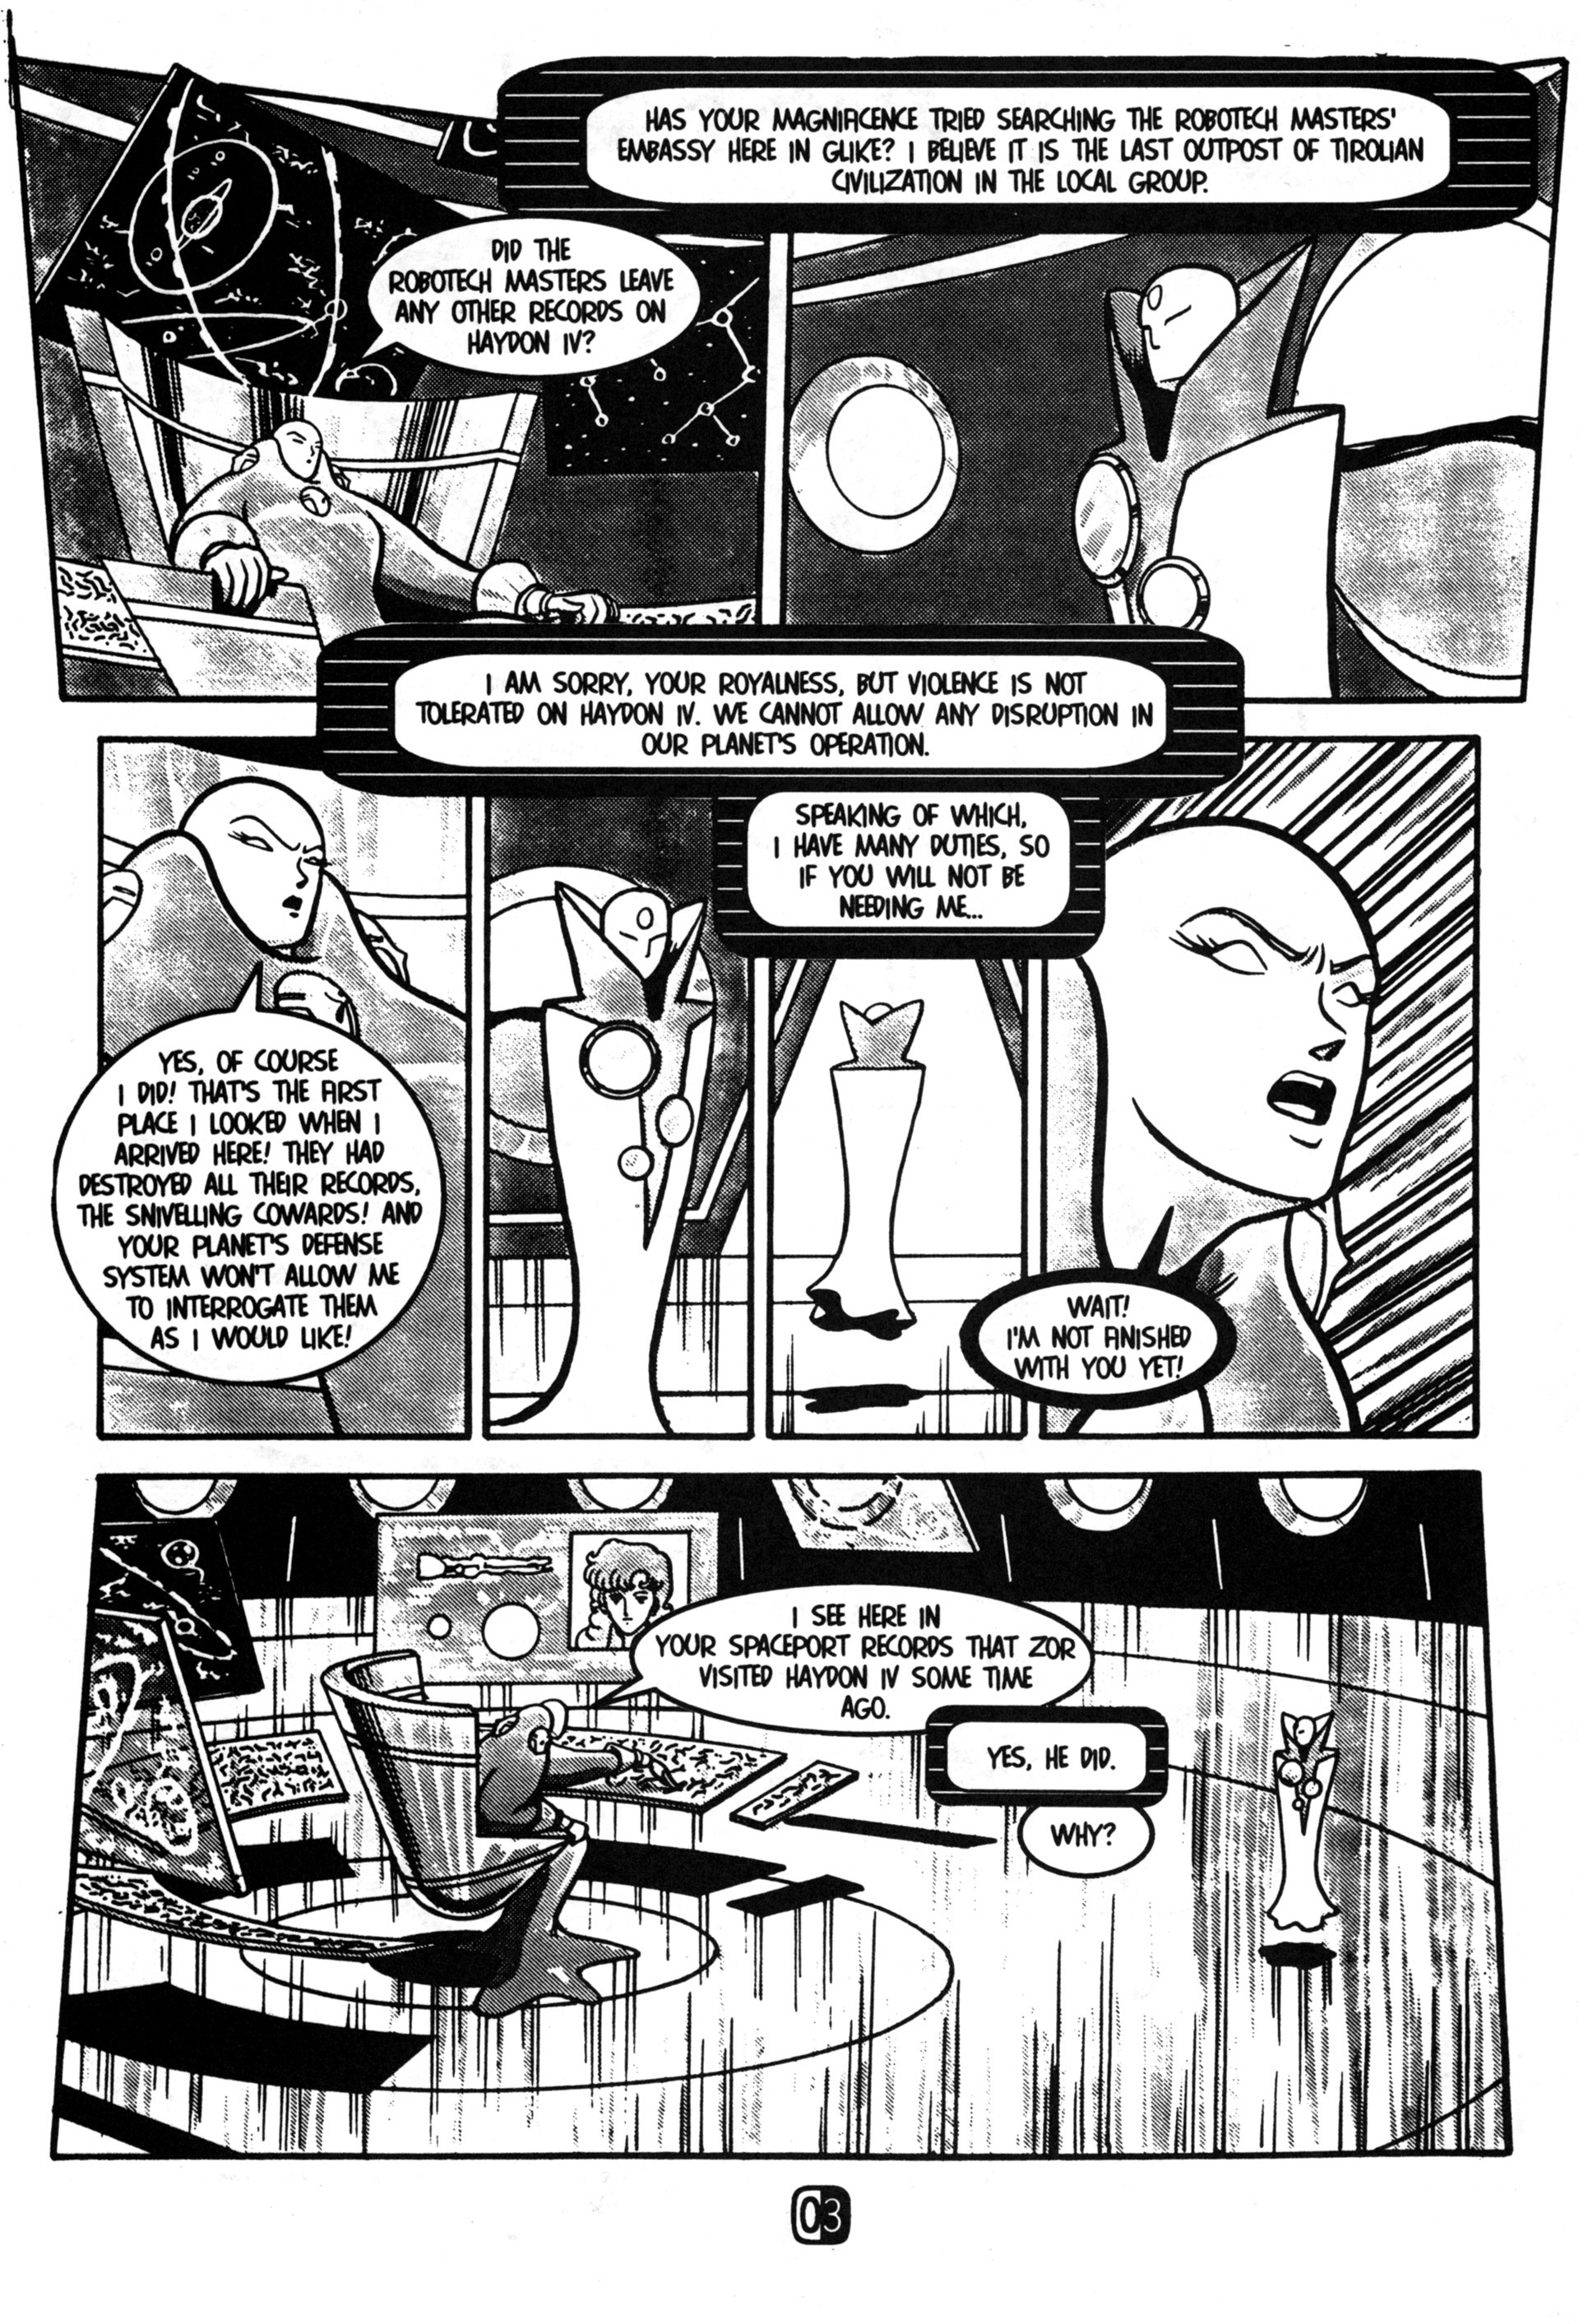 Read online Robotech: Cyber World - Secrets of Haydon IV comic -  Issue # Full - 5